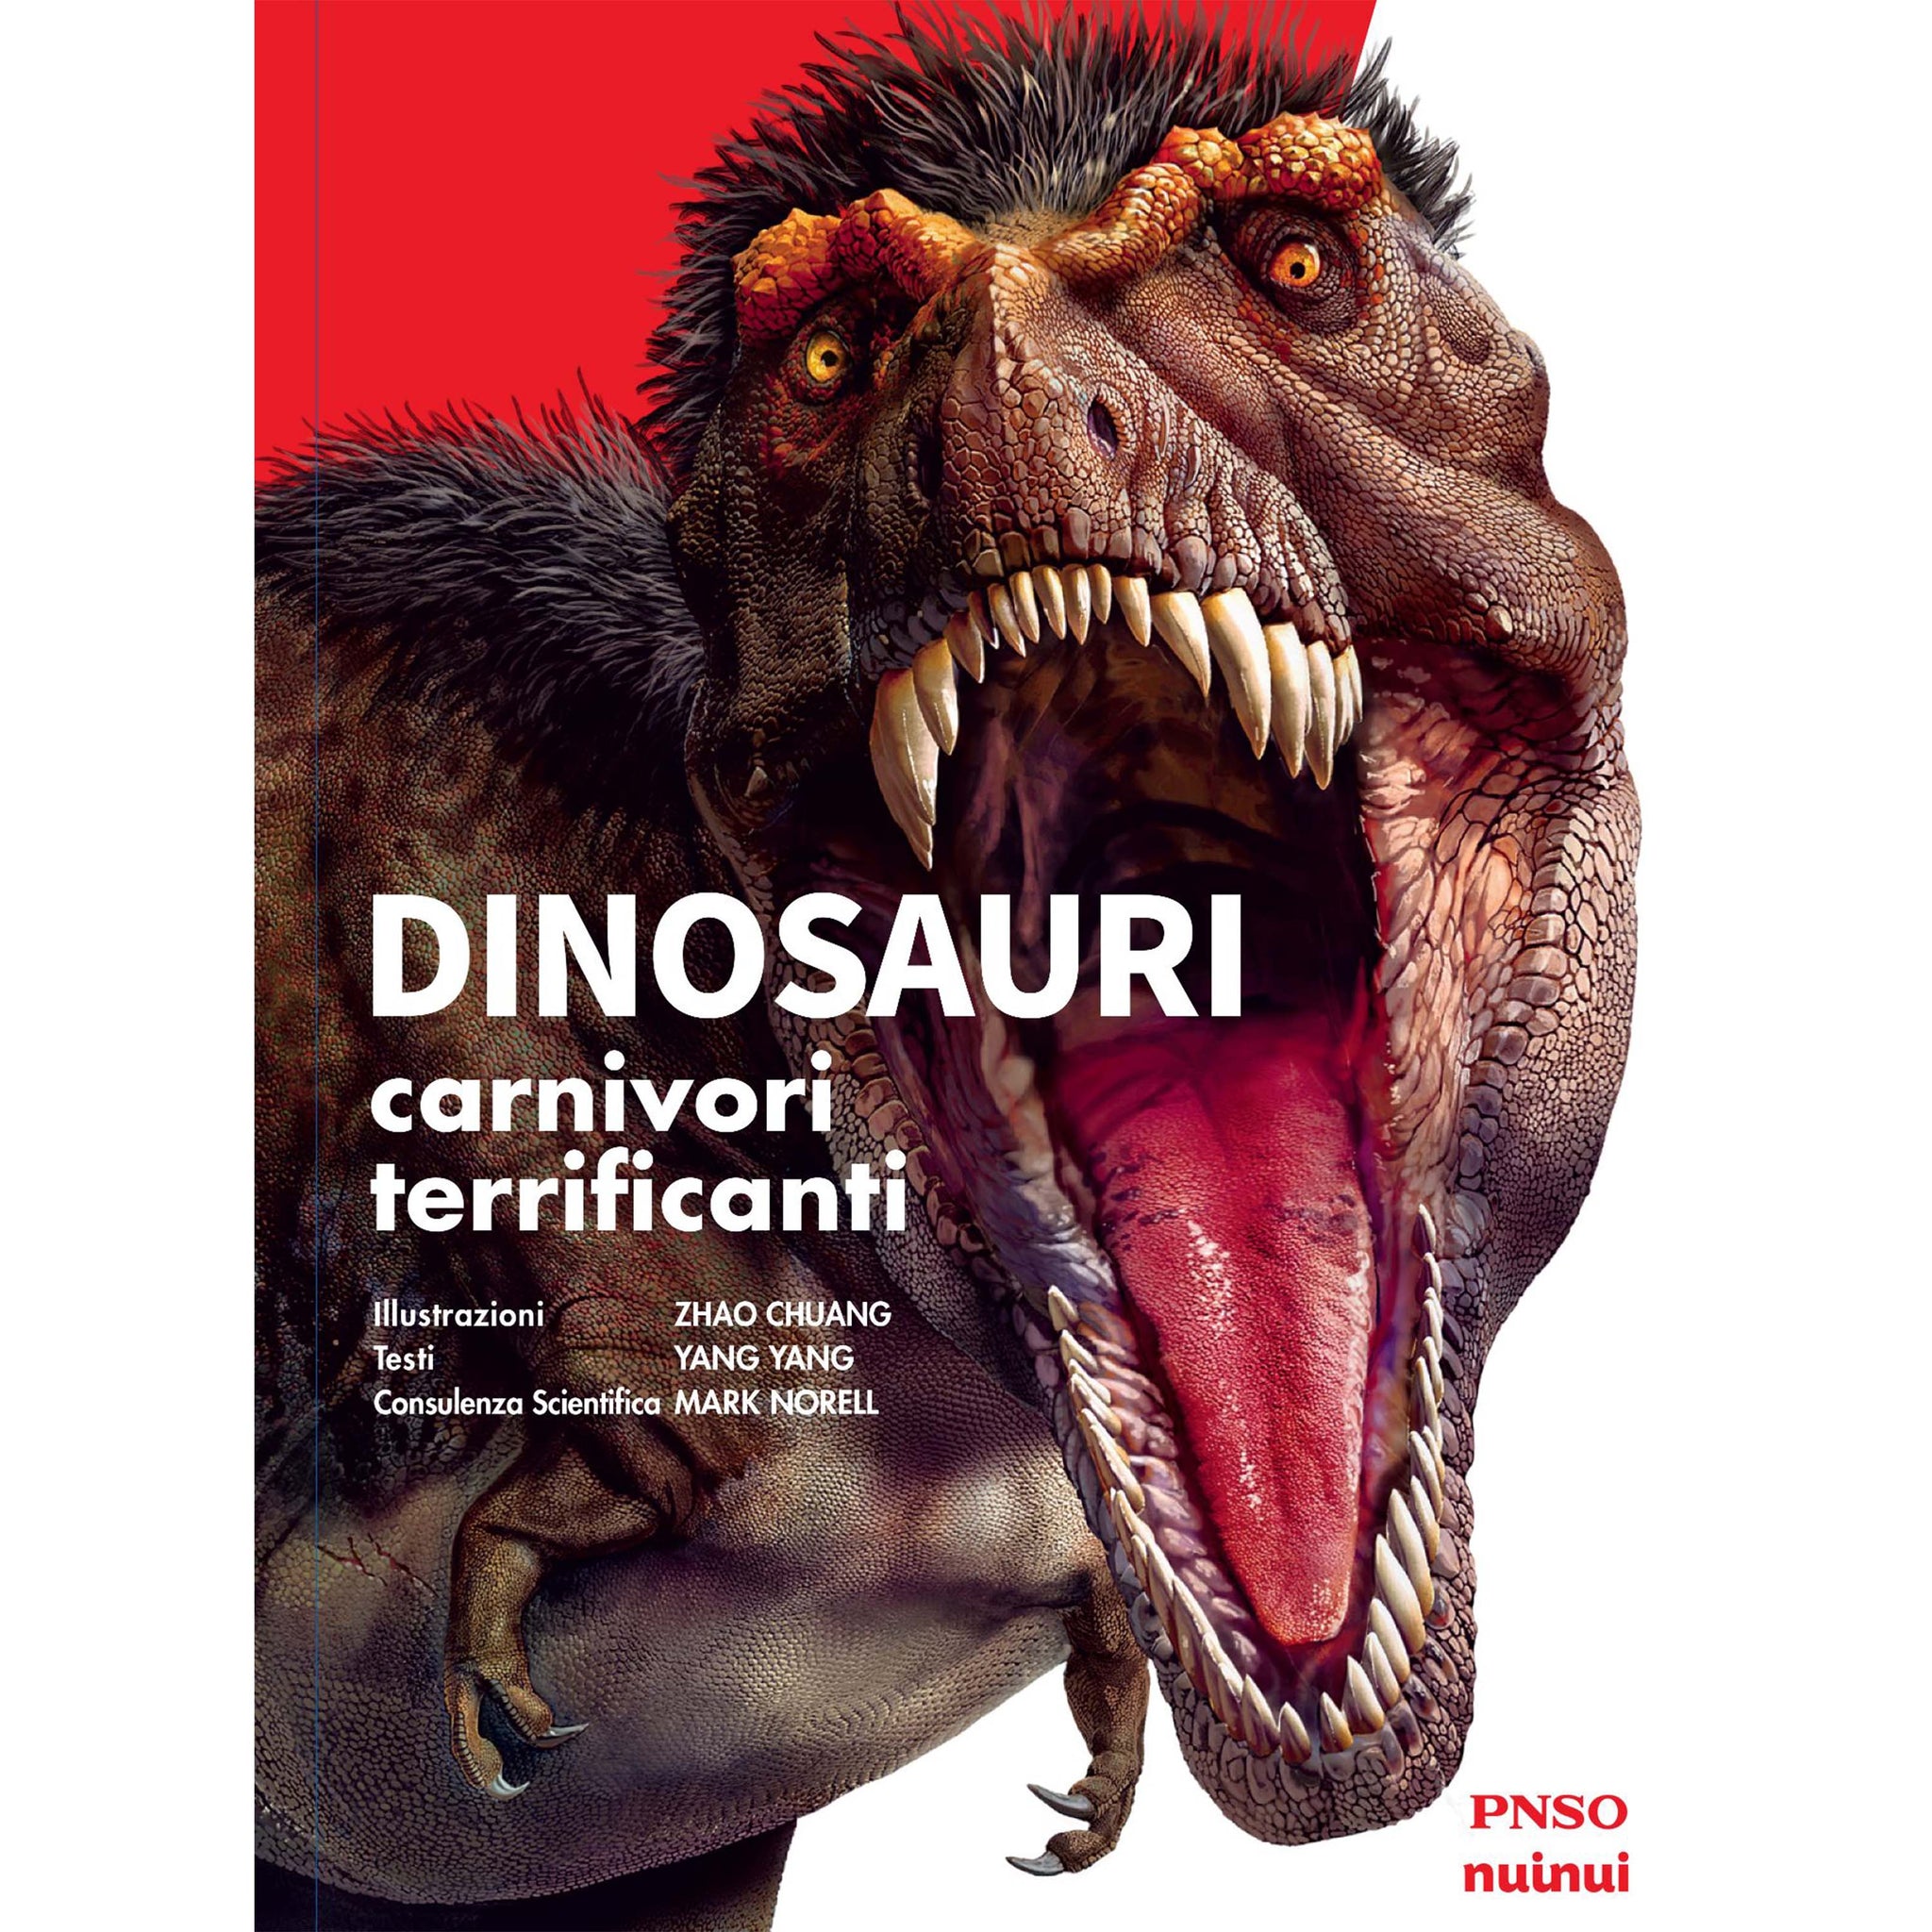 Dinosaurs - Terrifying carnivores